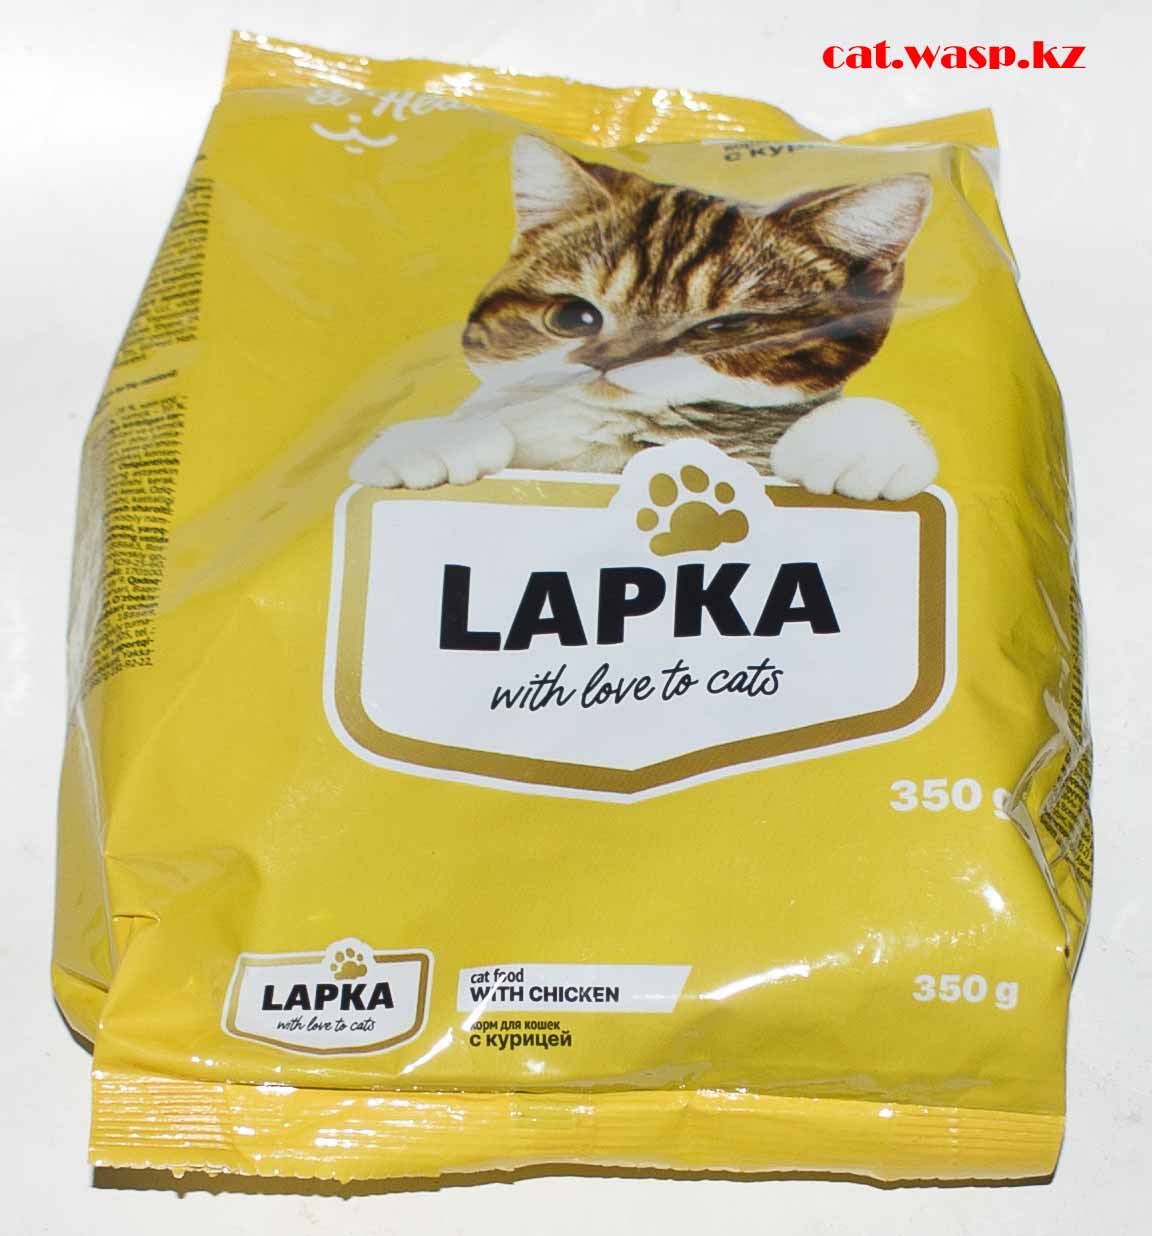 Отзыв на сухой корм для кошек LAPKA с курицей - какая цена